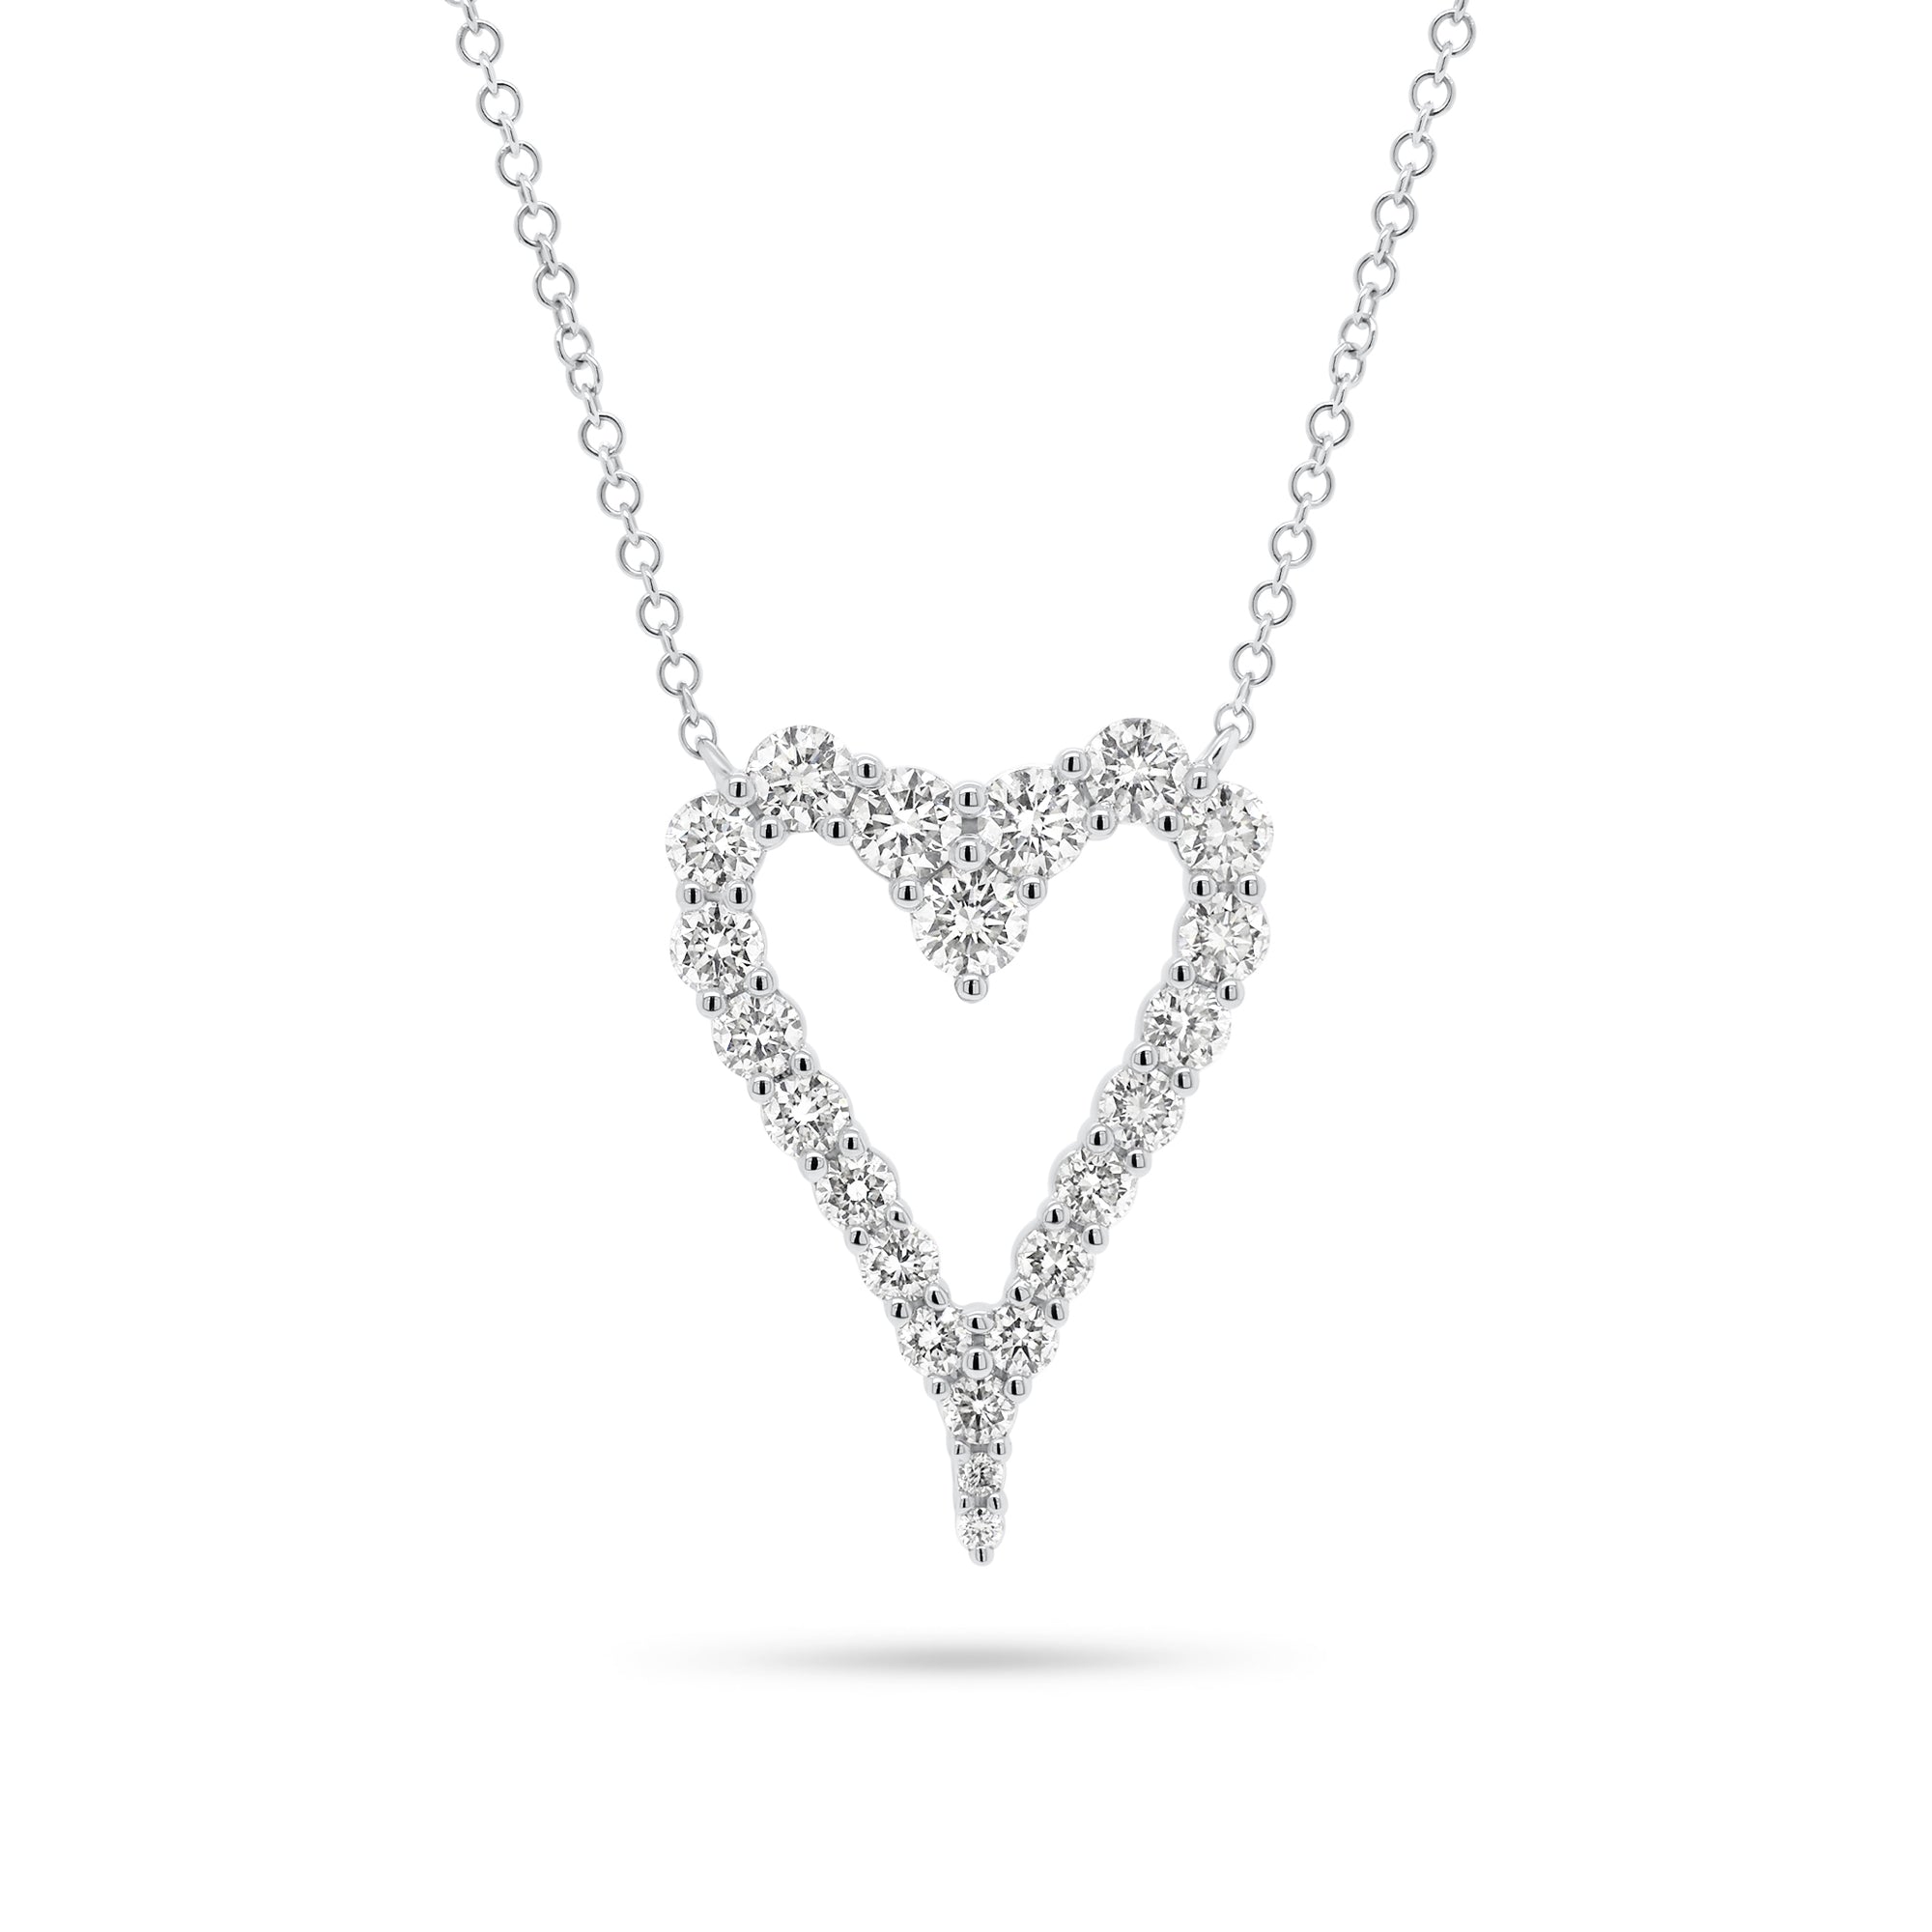 Diamond Open Elongate Heart Necklace  - 14K gold  - diamonds totaling 1.01 carats